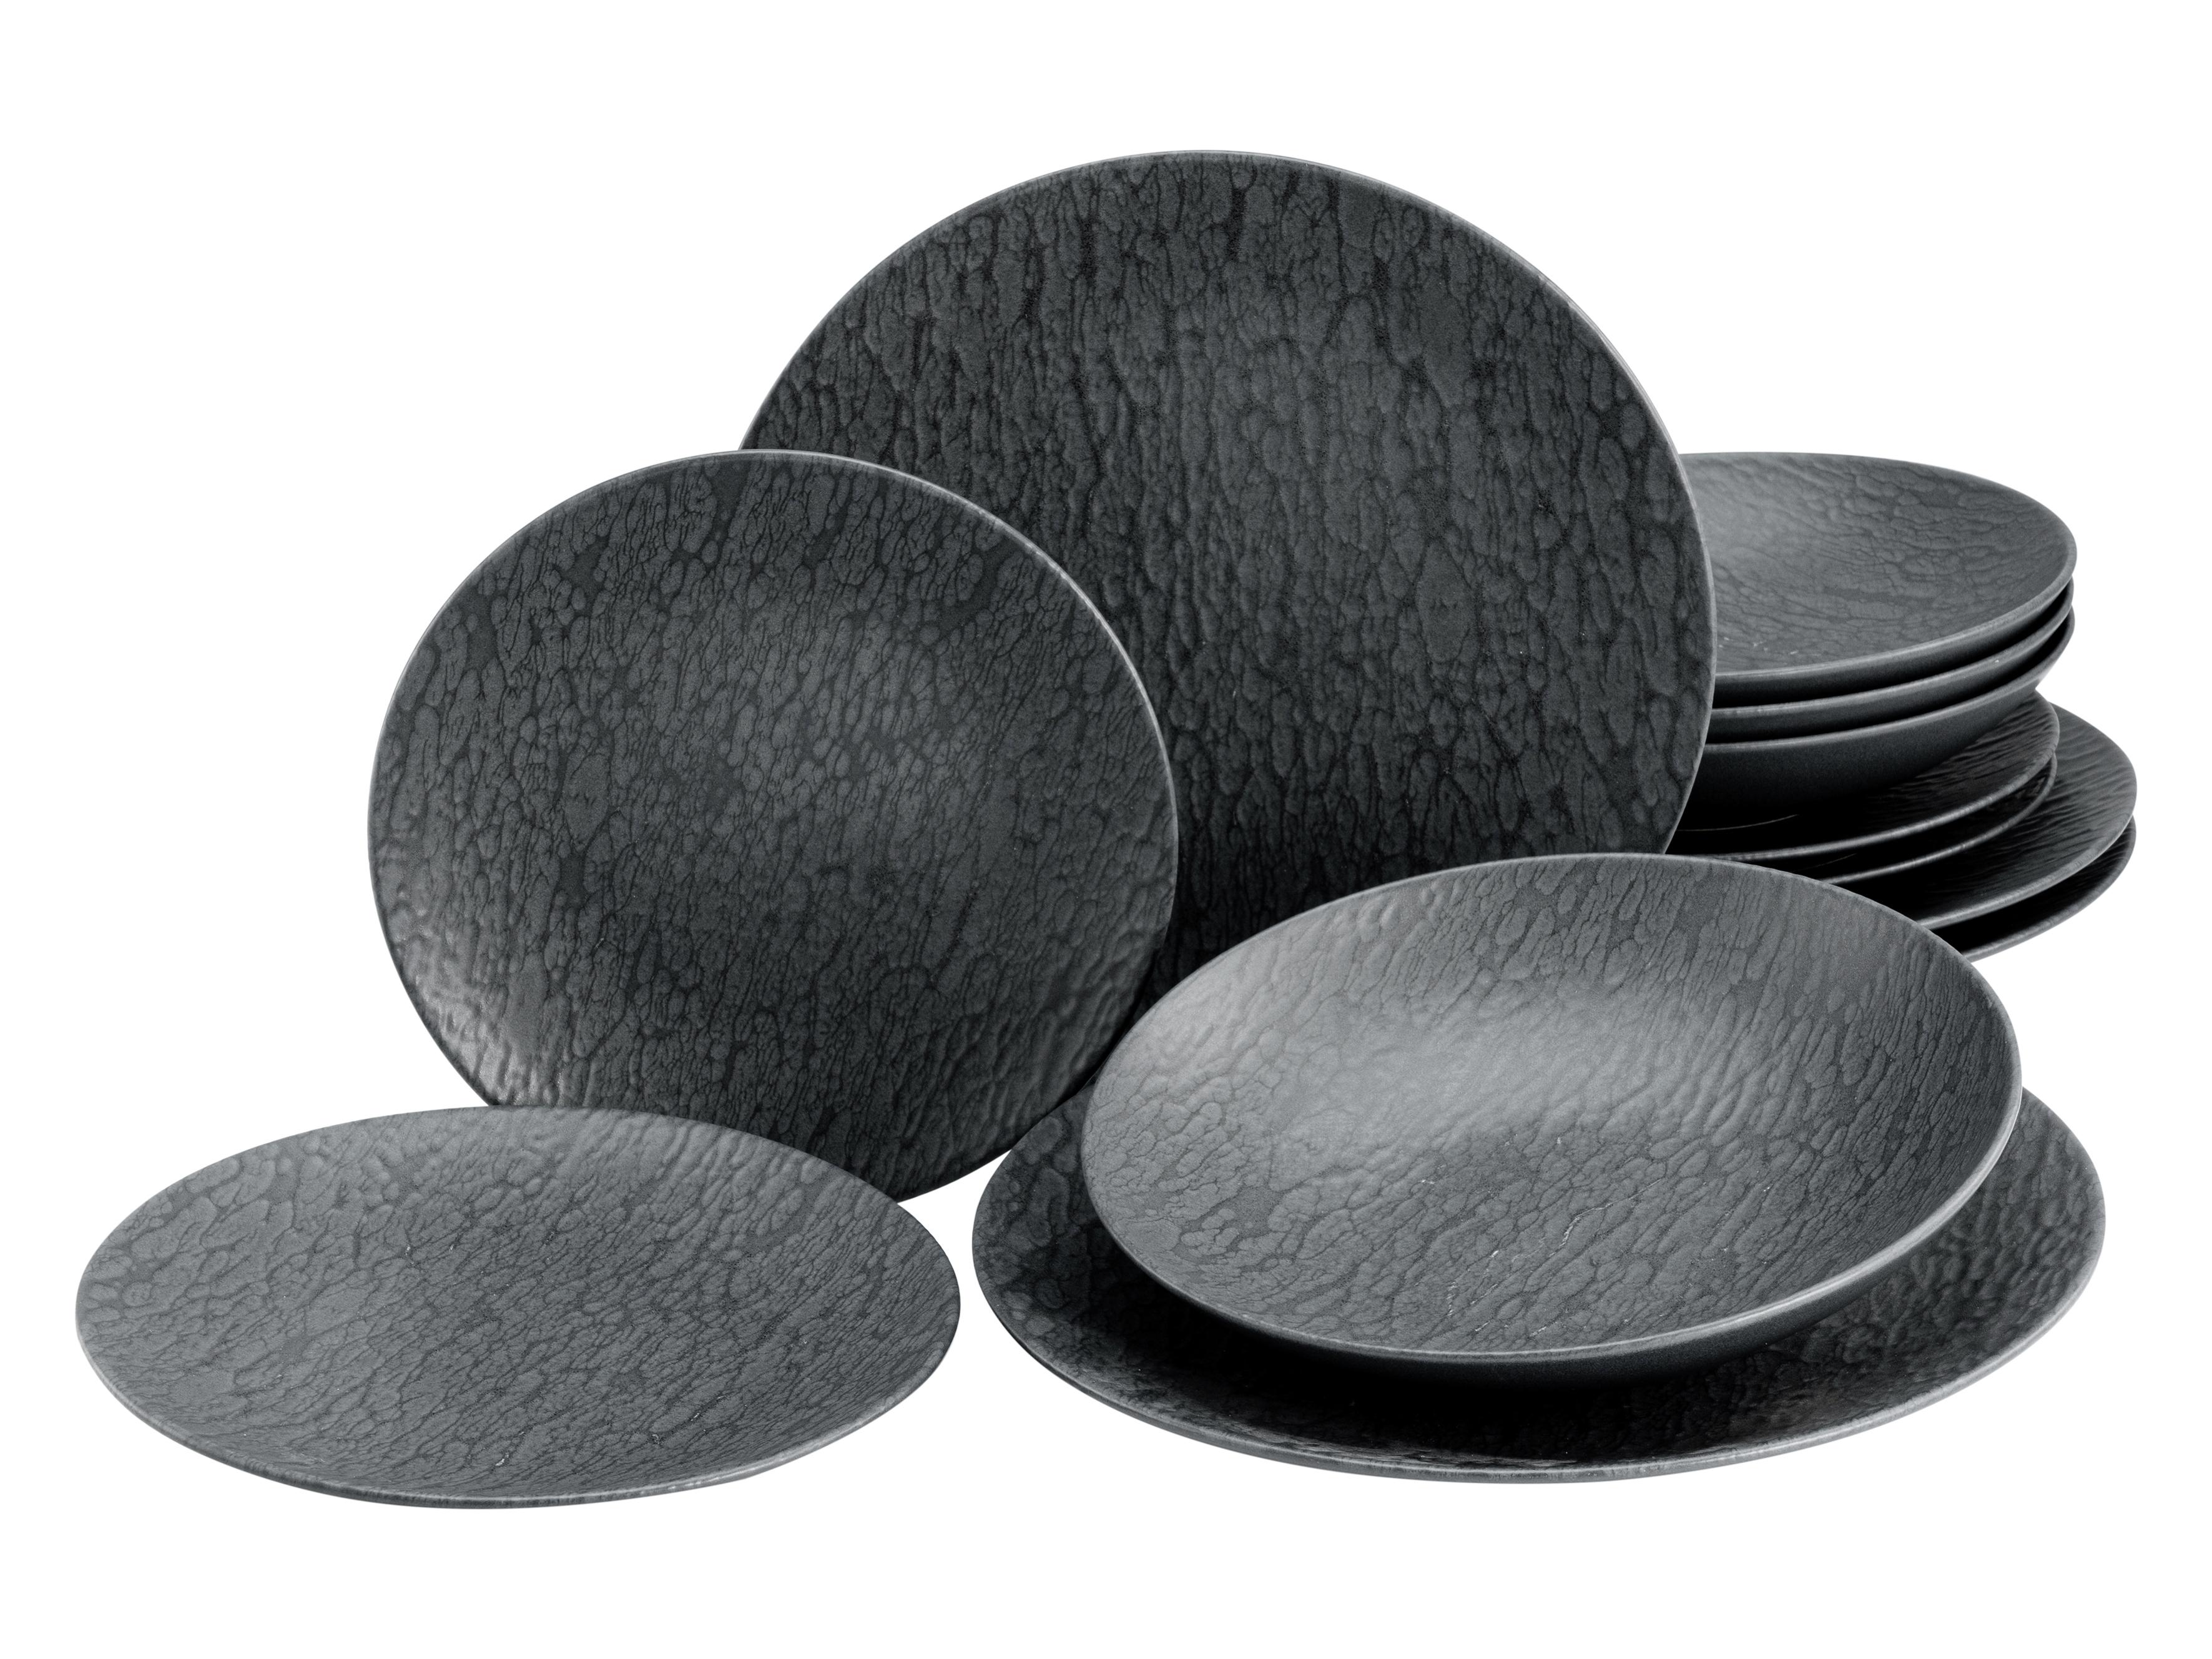 Tafelservice Black in Schwarz, 12-teilig - Schwarz, MODERN, Keramik (32,6/28,8/28,5cm) - Premium Living